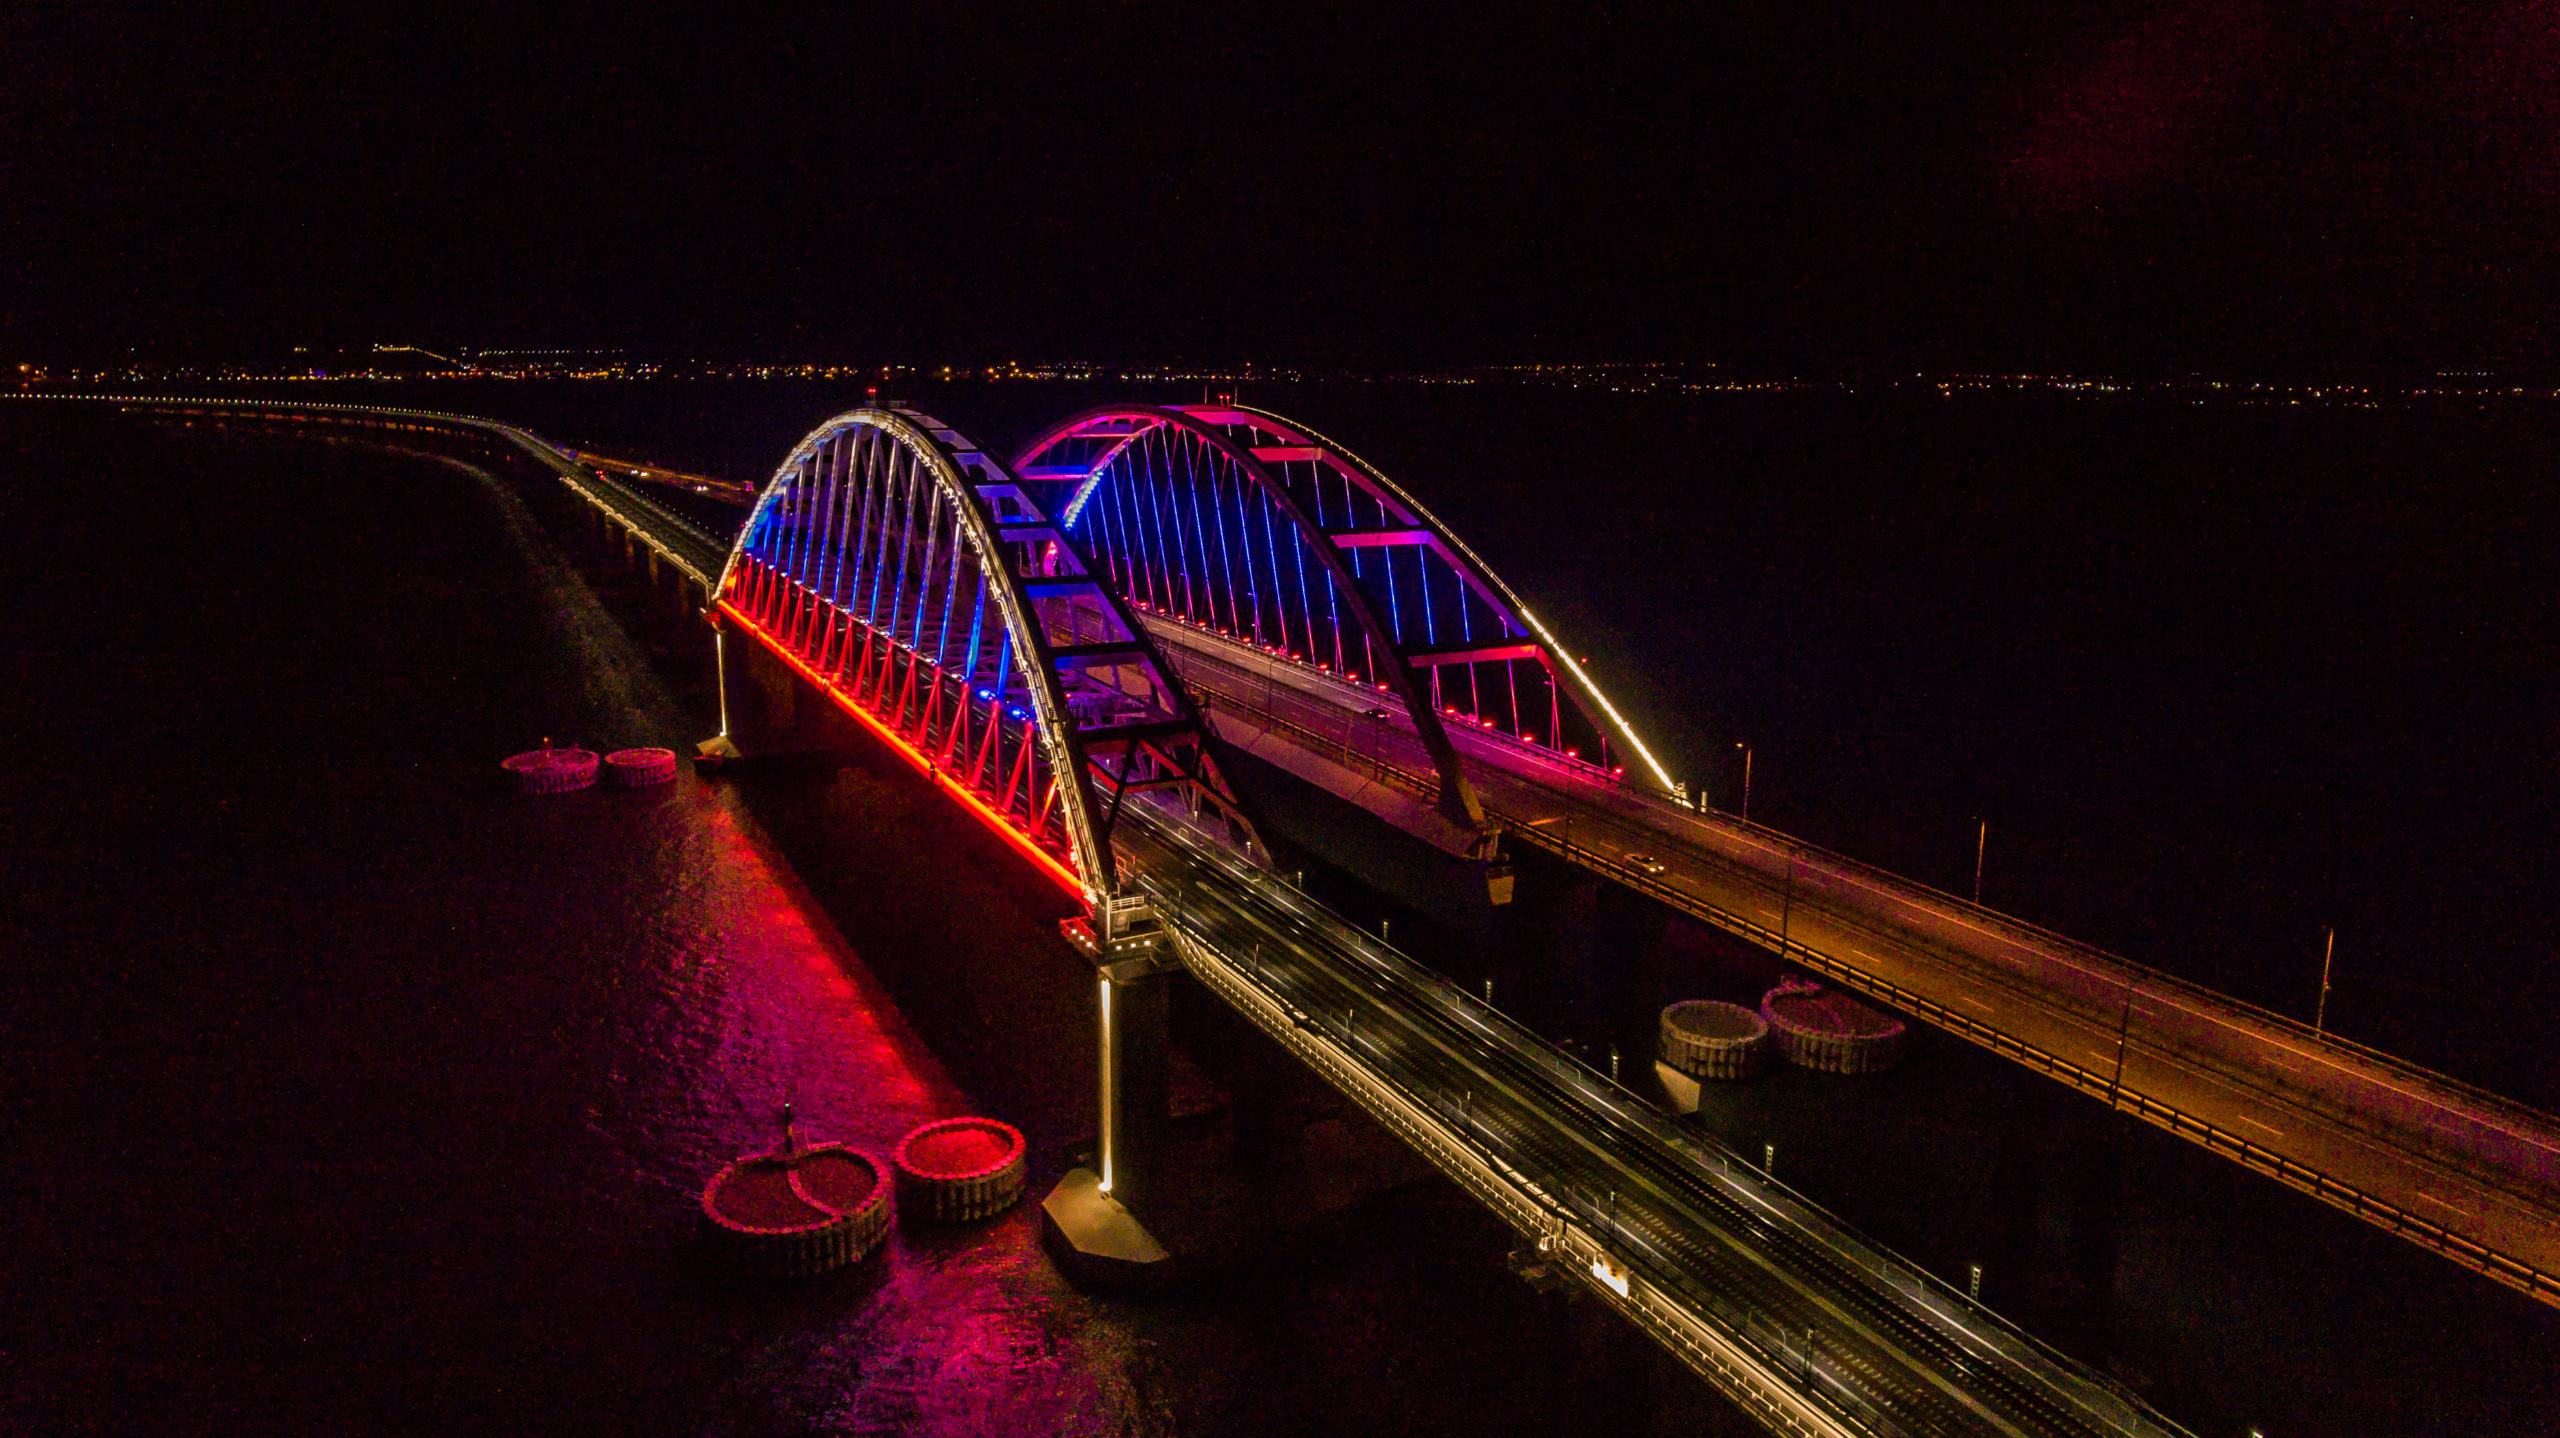 крымский мост картинки